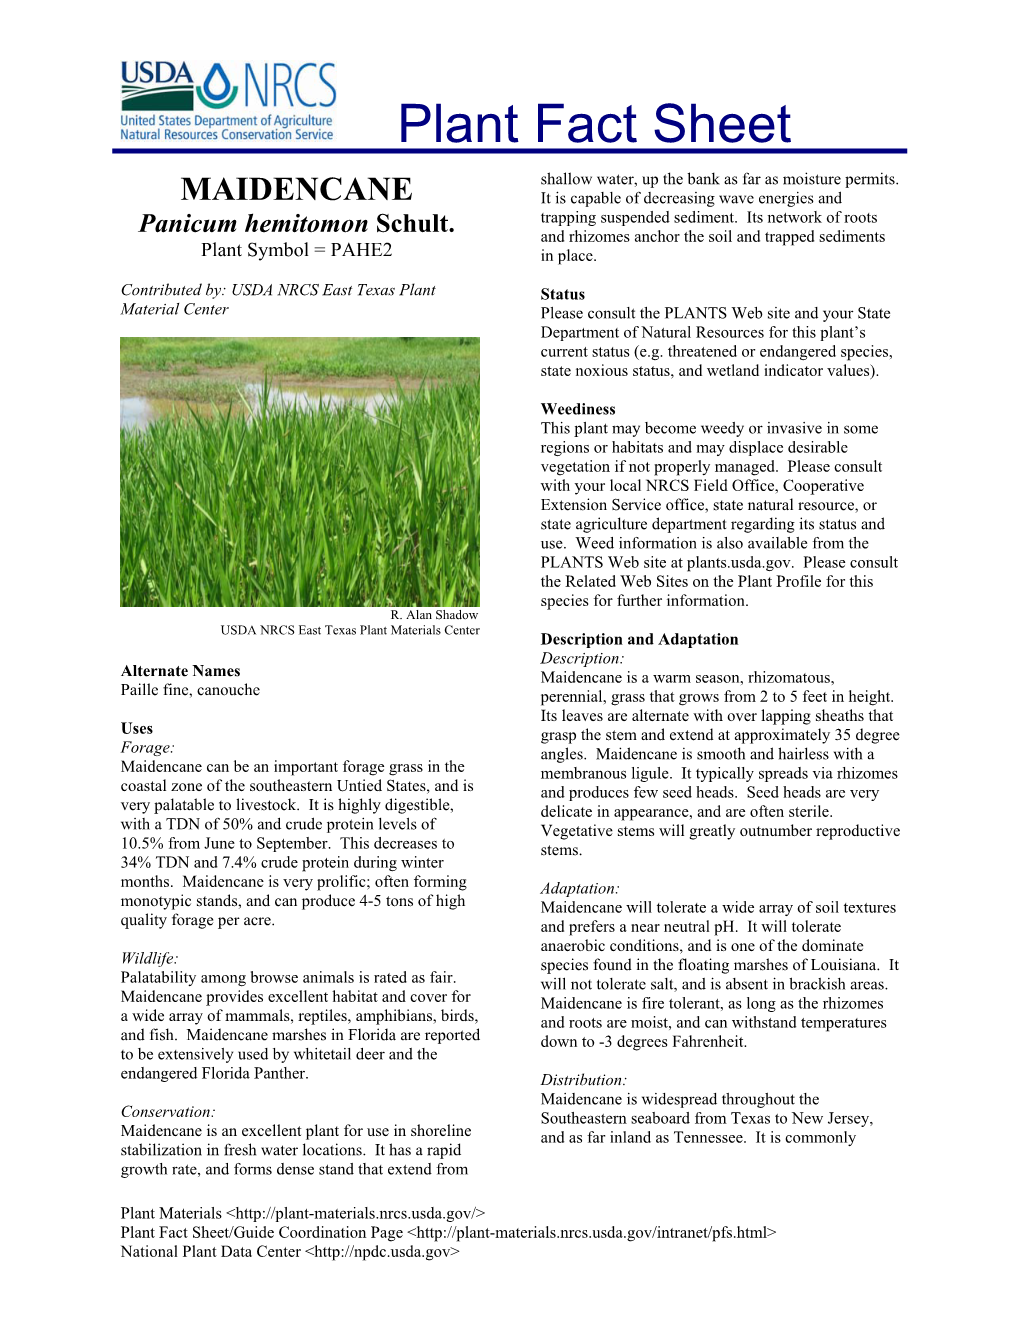 Maidencane Plant Fact Sheet